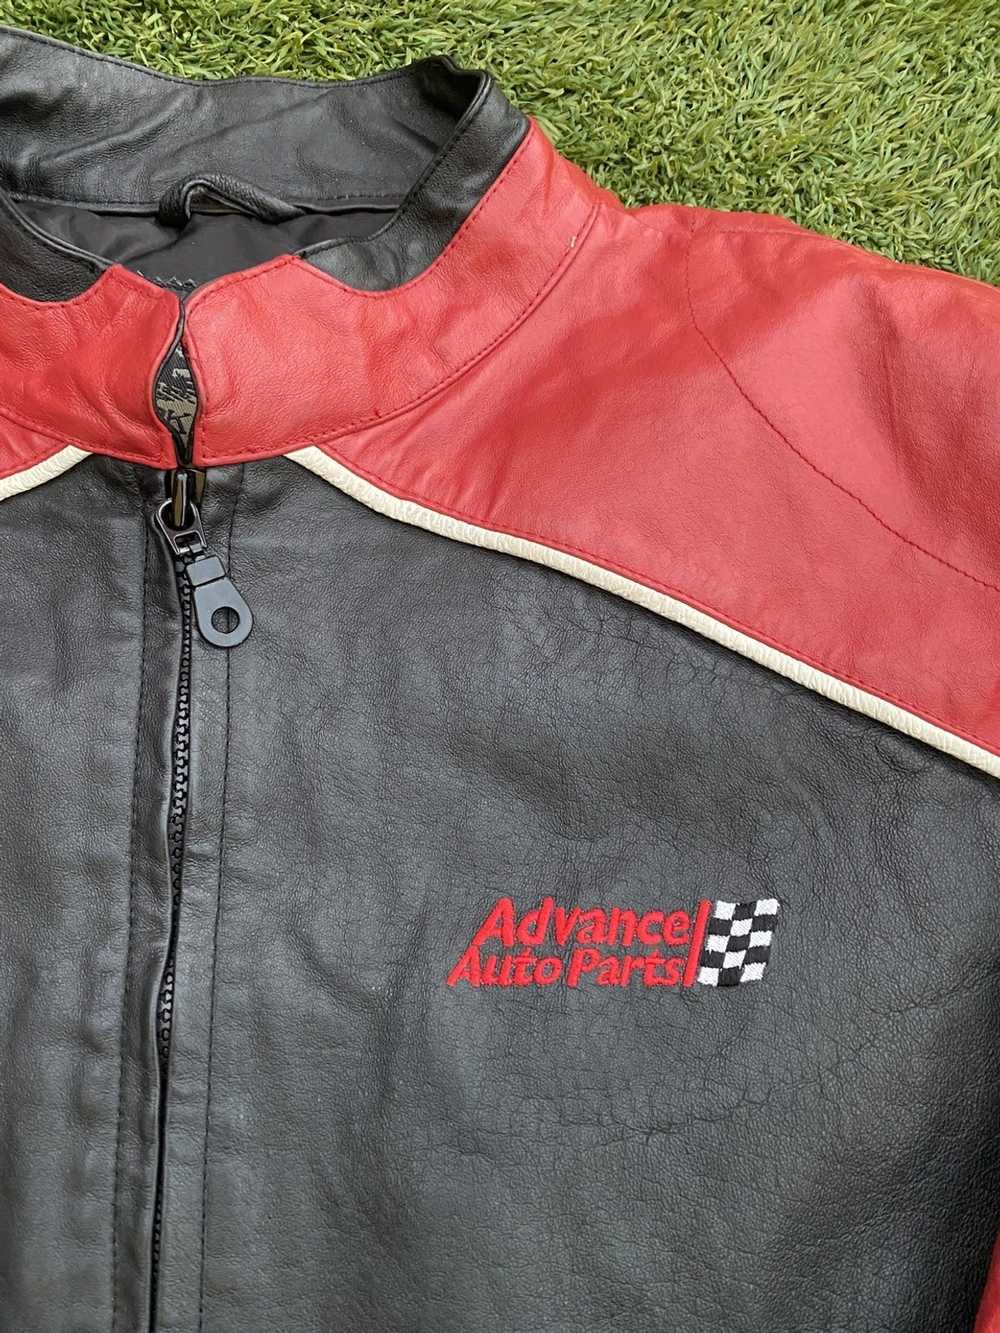 Vintage Burks Bay Racing Jacket - image 4